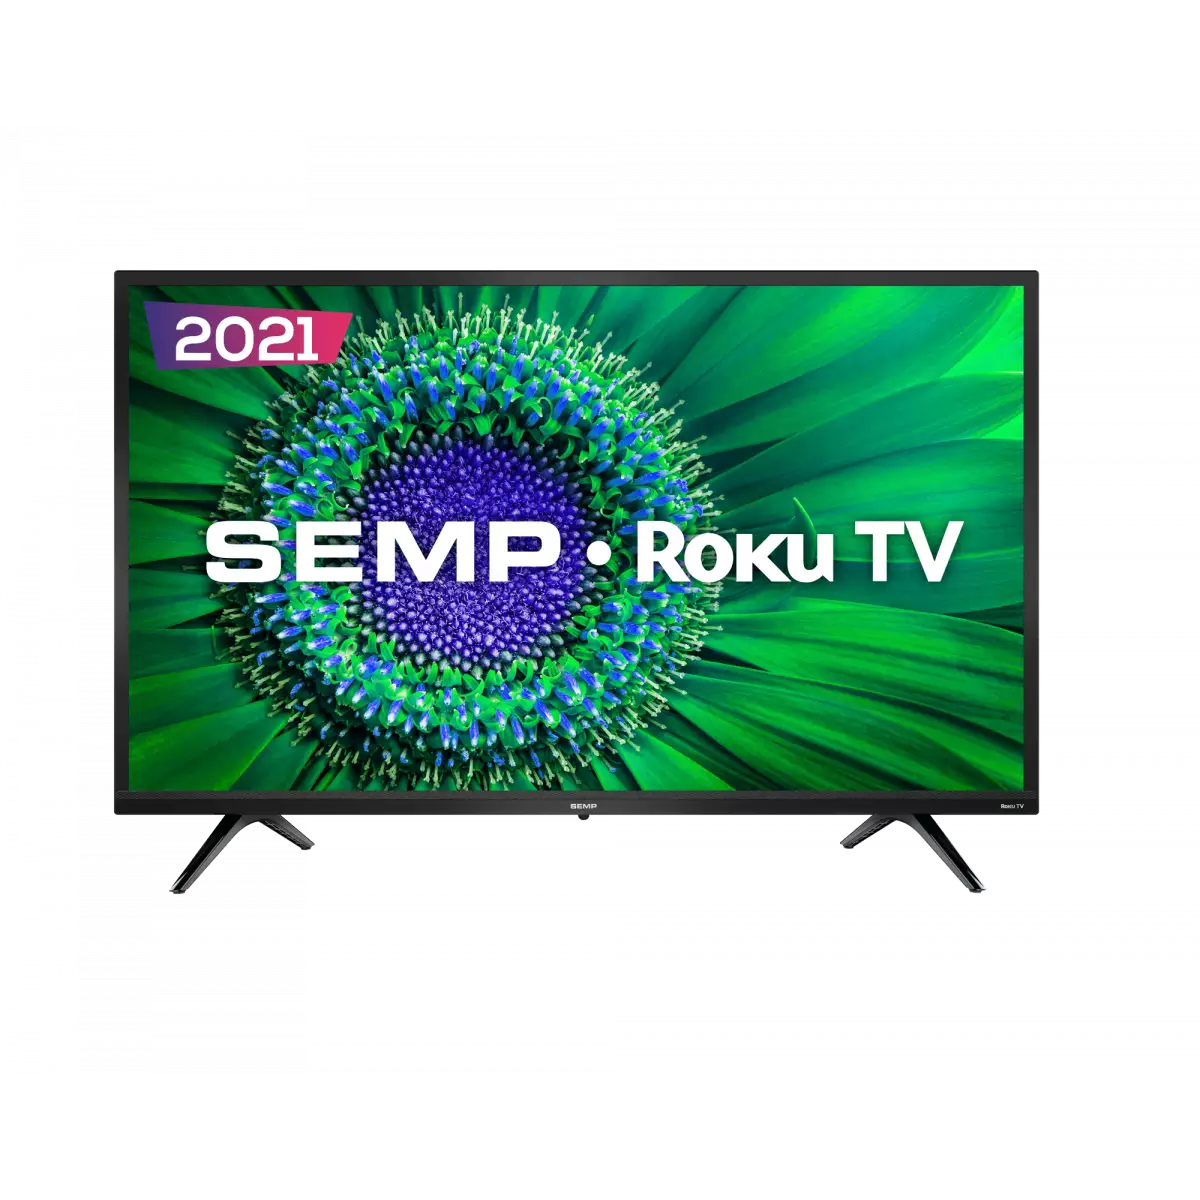 Smart Tv 43" Semp Roku LED Full HD R5500 Wi-Fi 3 HDMI Dual Band 1 USB DTV Decoder, , large image number 0